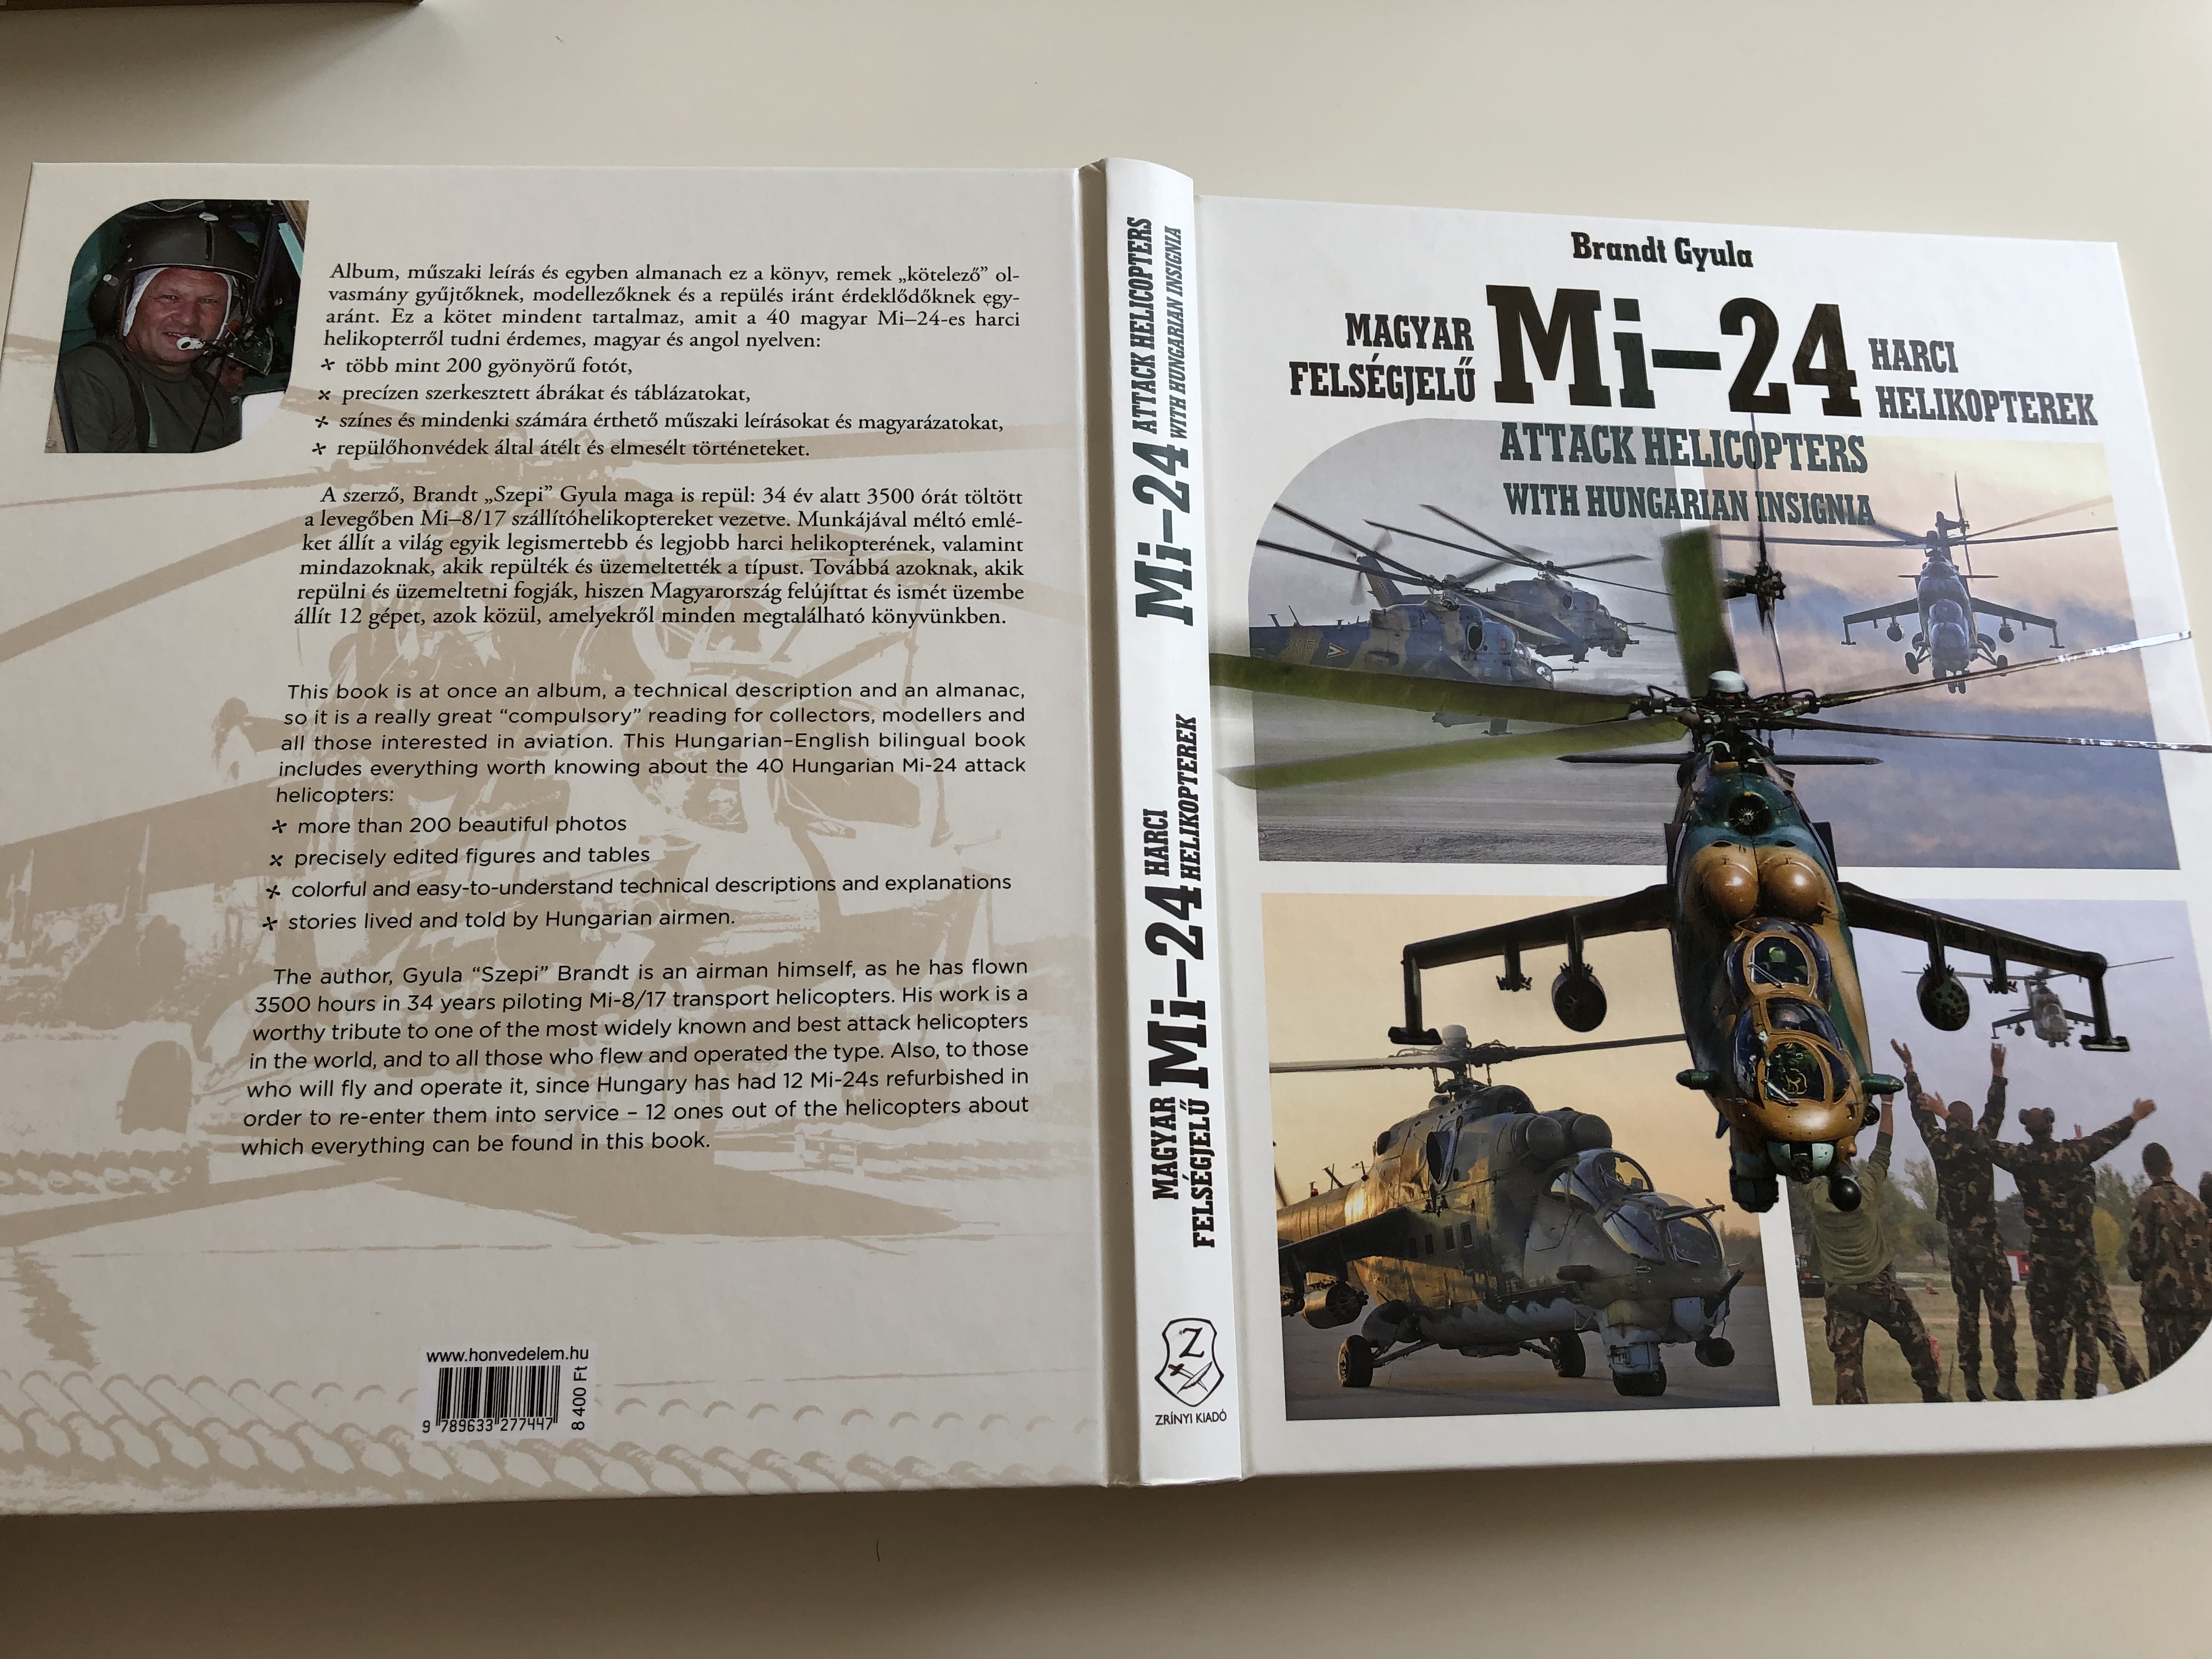 magyar-fels-gjel-mi-24-harci-helikopterek-by-brandt-gyula-mi-24-attack-helicopters-with-hungarian-insignia-english-hungarian-bilingual-edition-hm-zr-nyi-kiad-2018-25-.jpg